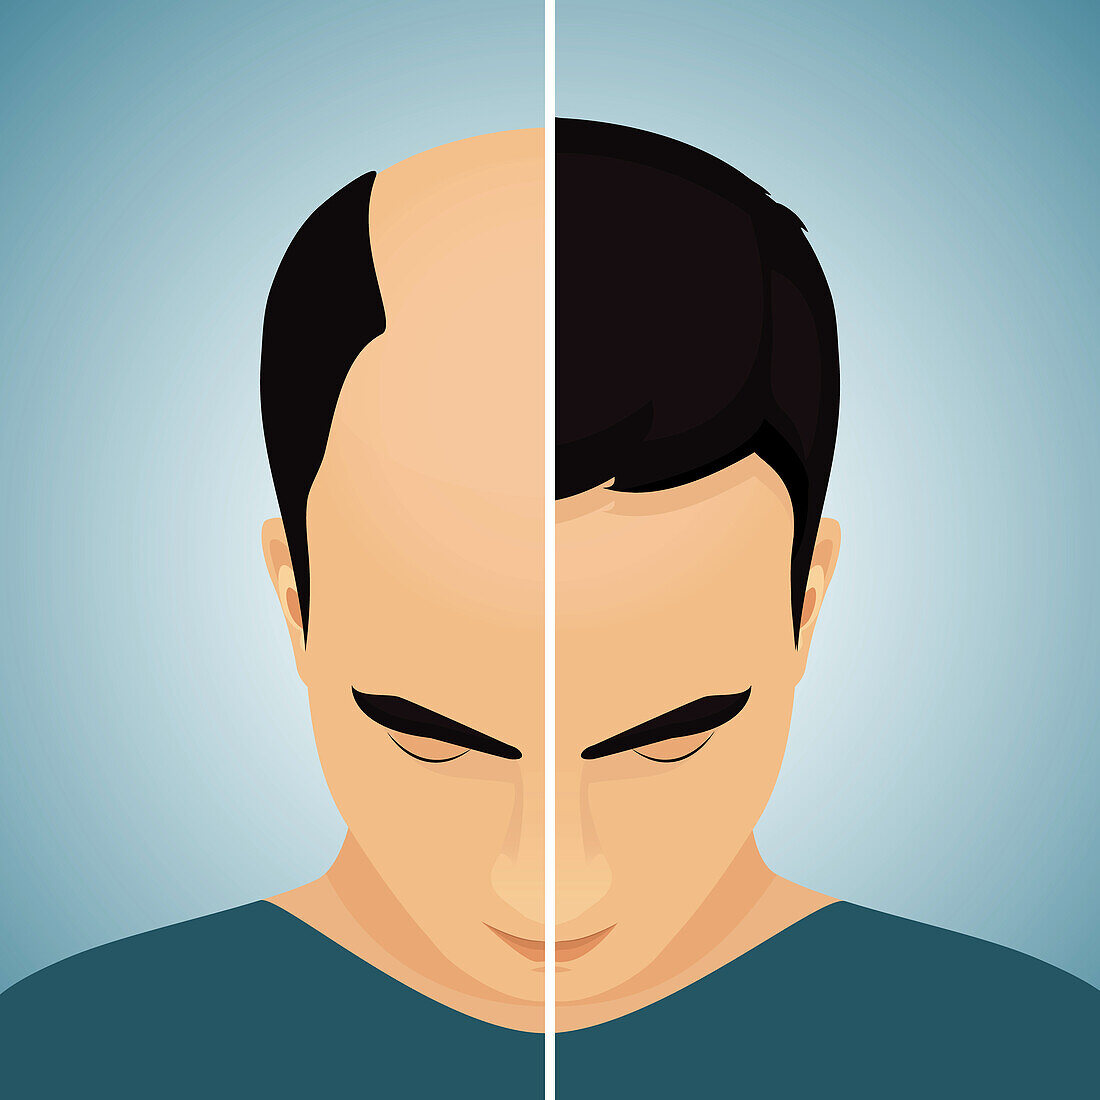 Hair loss in men, conceptual illustration